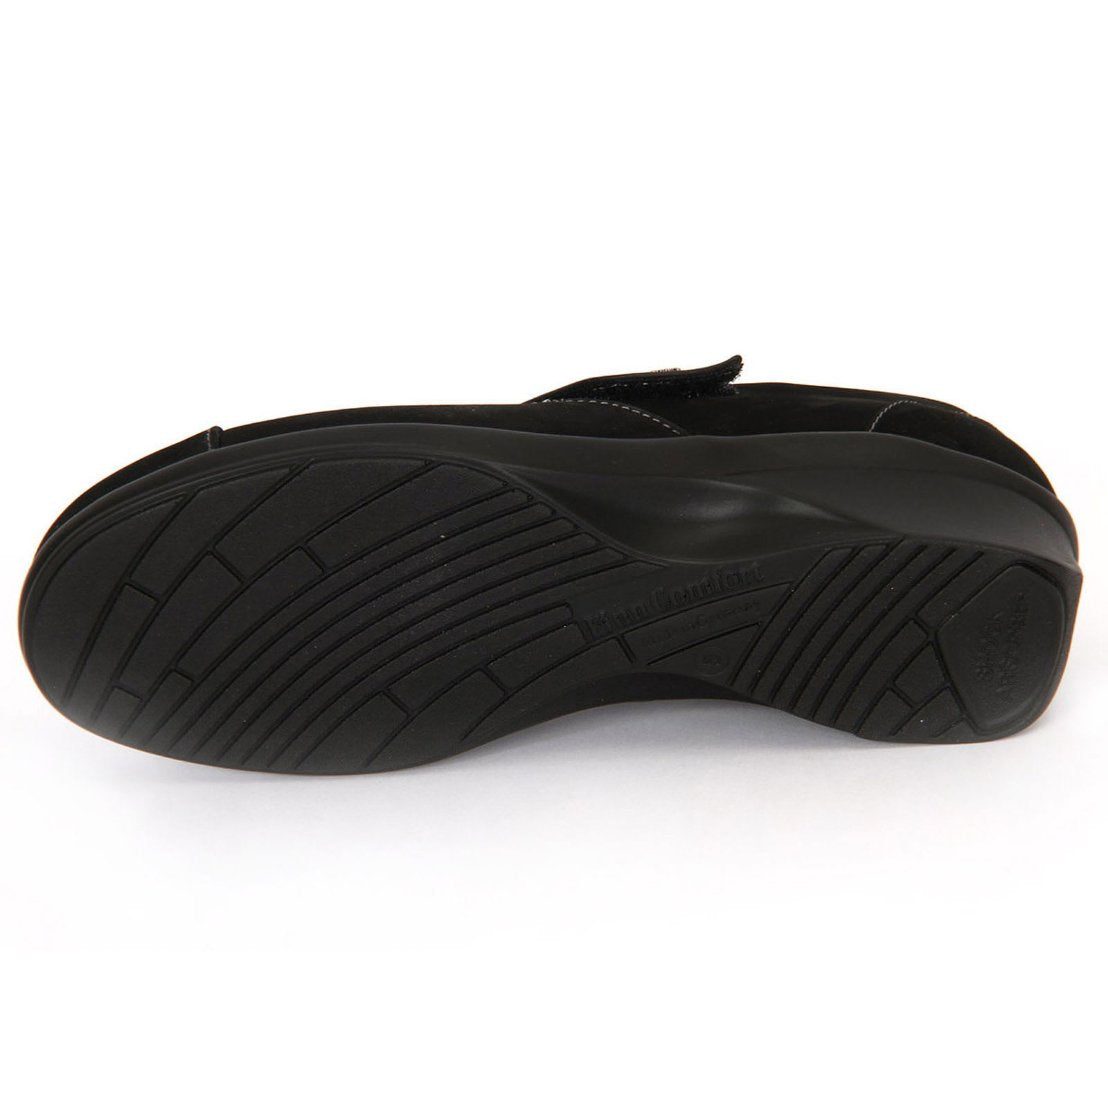 Finn Comfort Aquila Nubuck Leather Women's Mary Jane Shoes#color_black